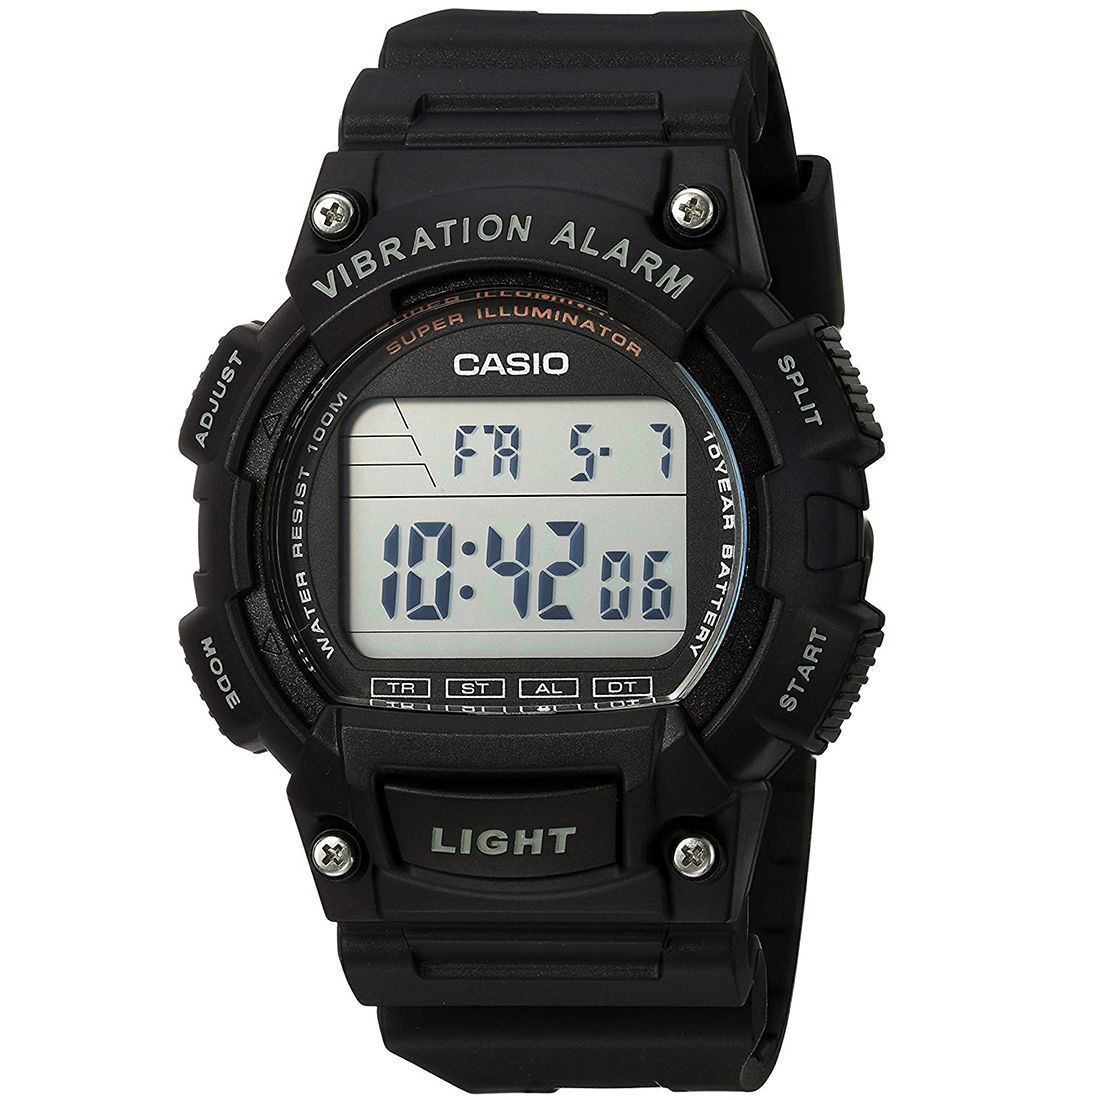 Casio Youth Super Illuminator Vibration Alarm Dual Time Digital Watch_0